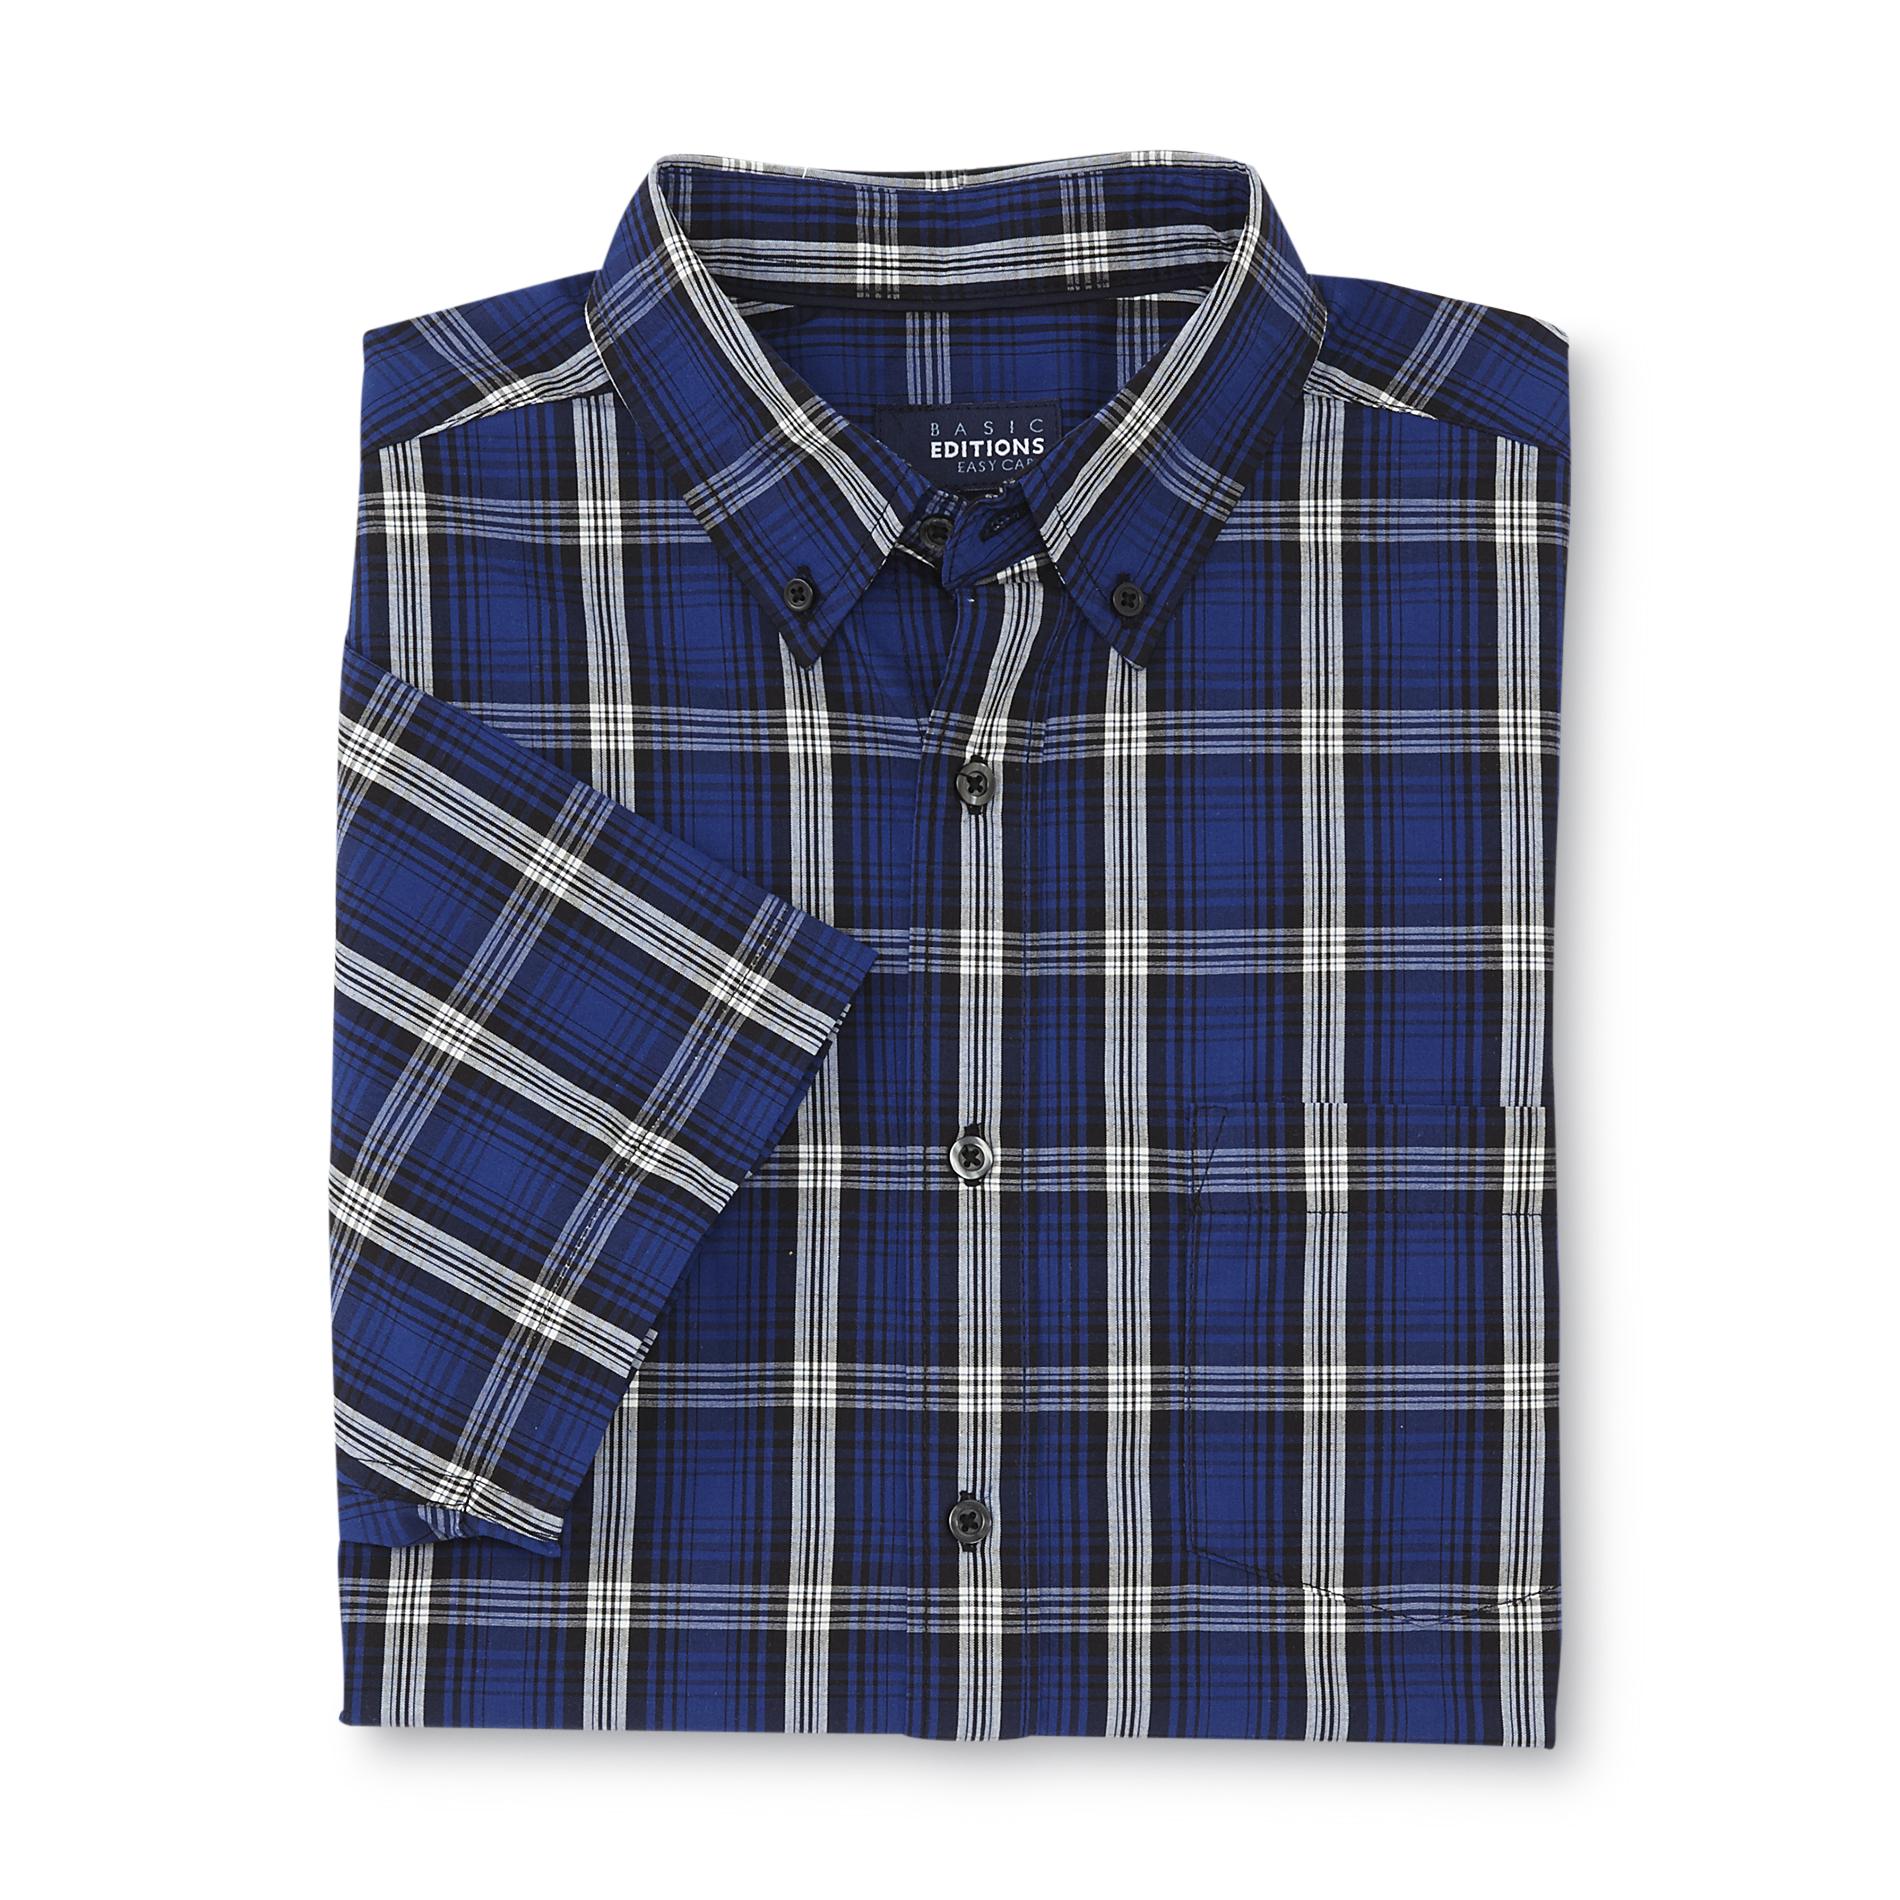 Basic Editions Men's Big & Tall Short-Sleeve Dress Shirt - Plaid